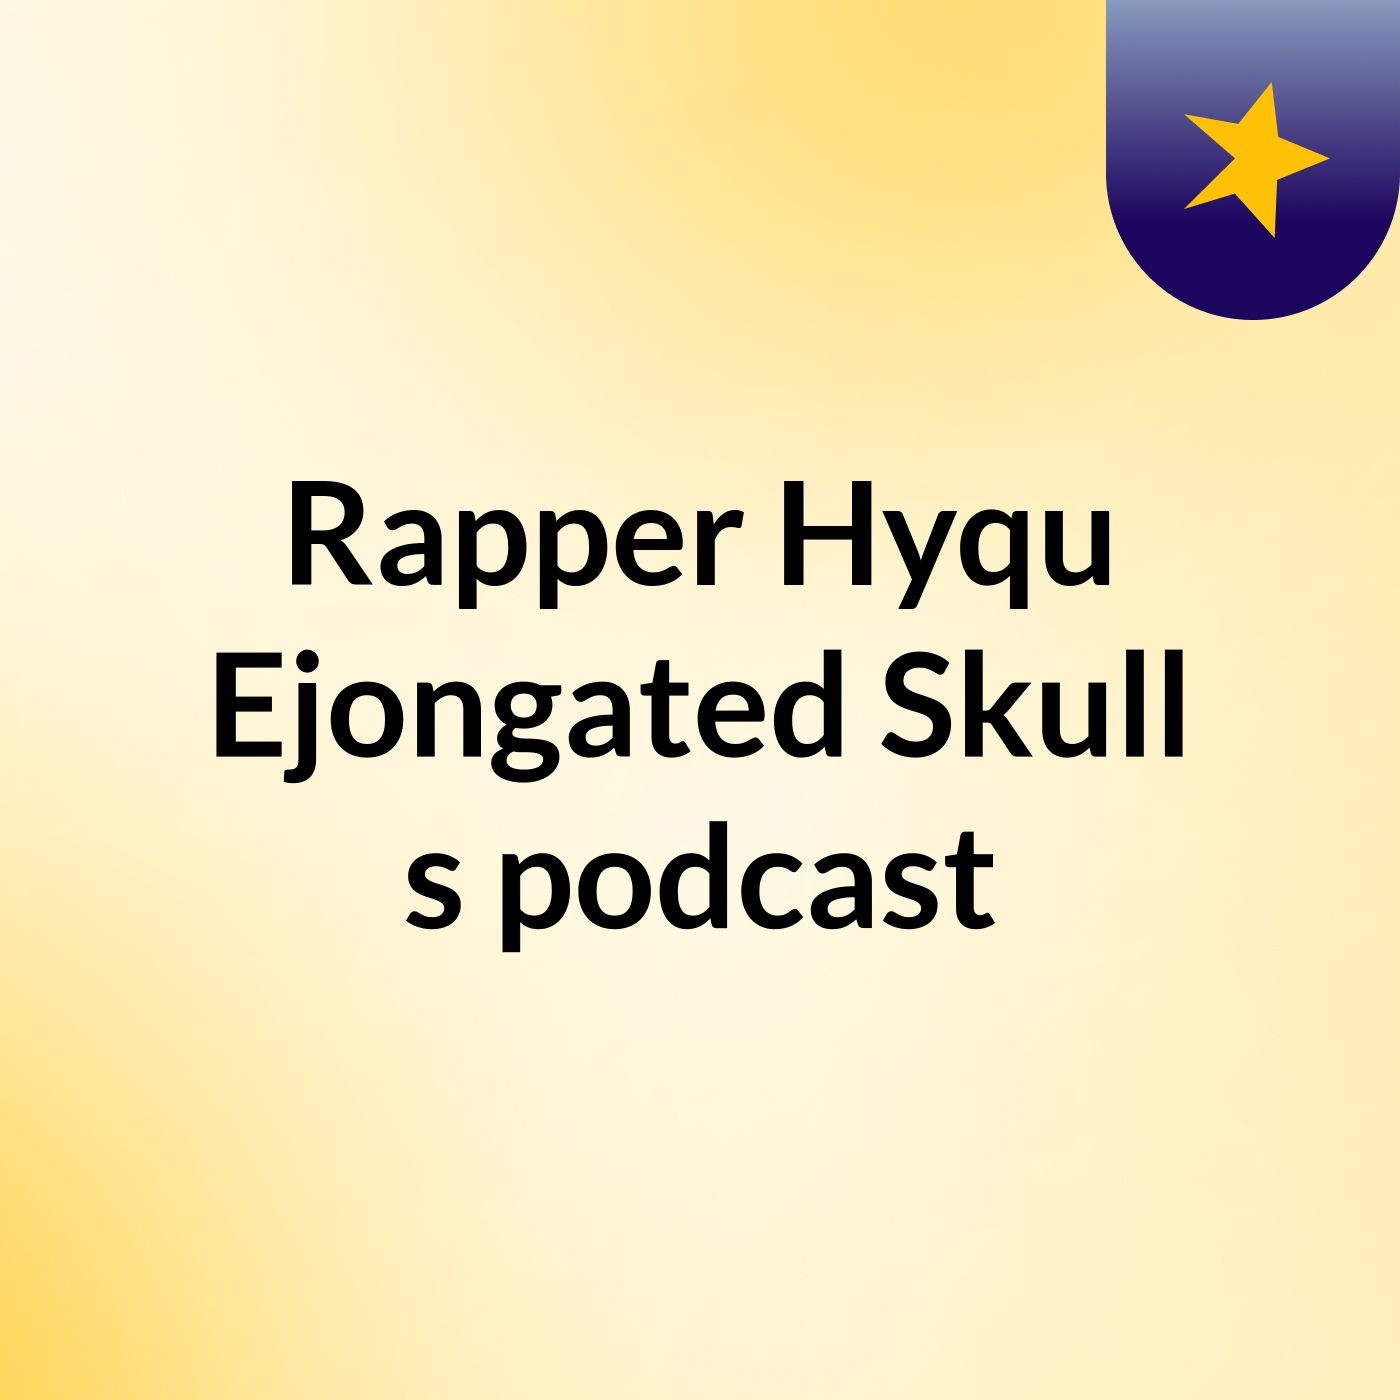 Rapper Hyqu Ejongated Skull's podcast